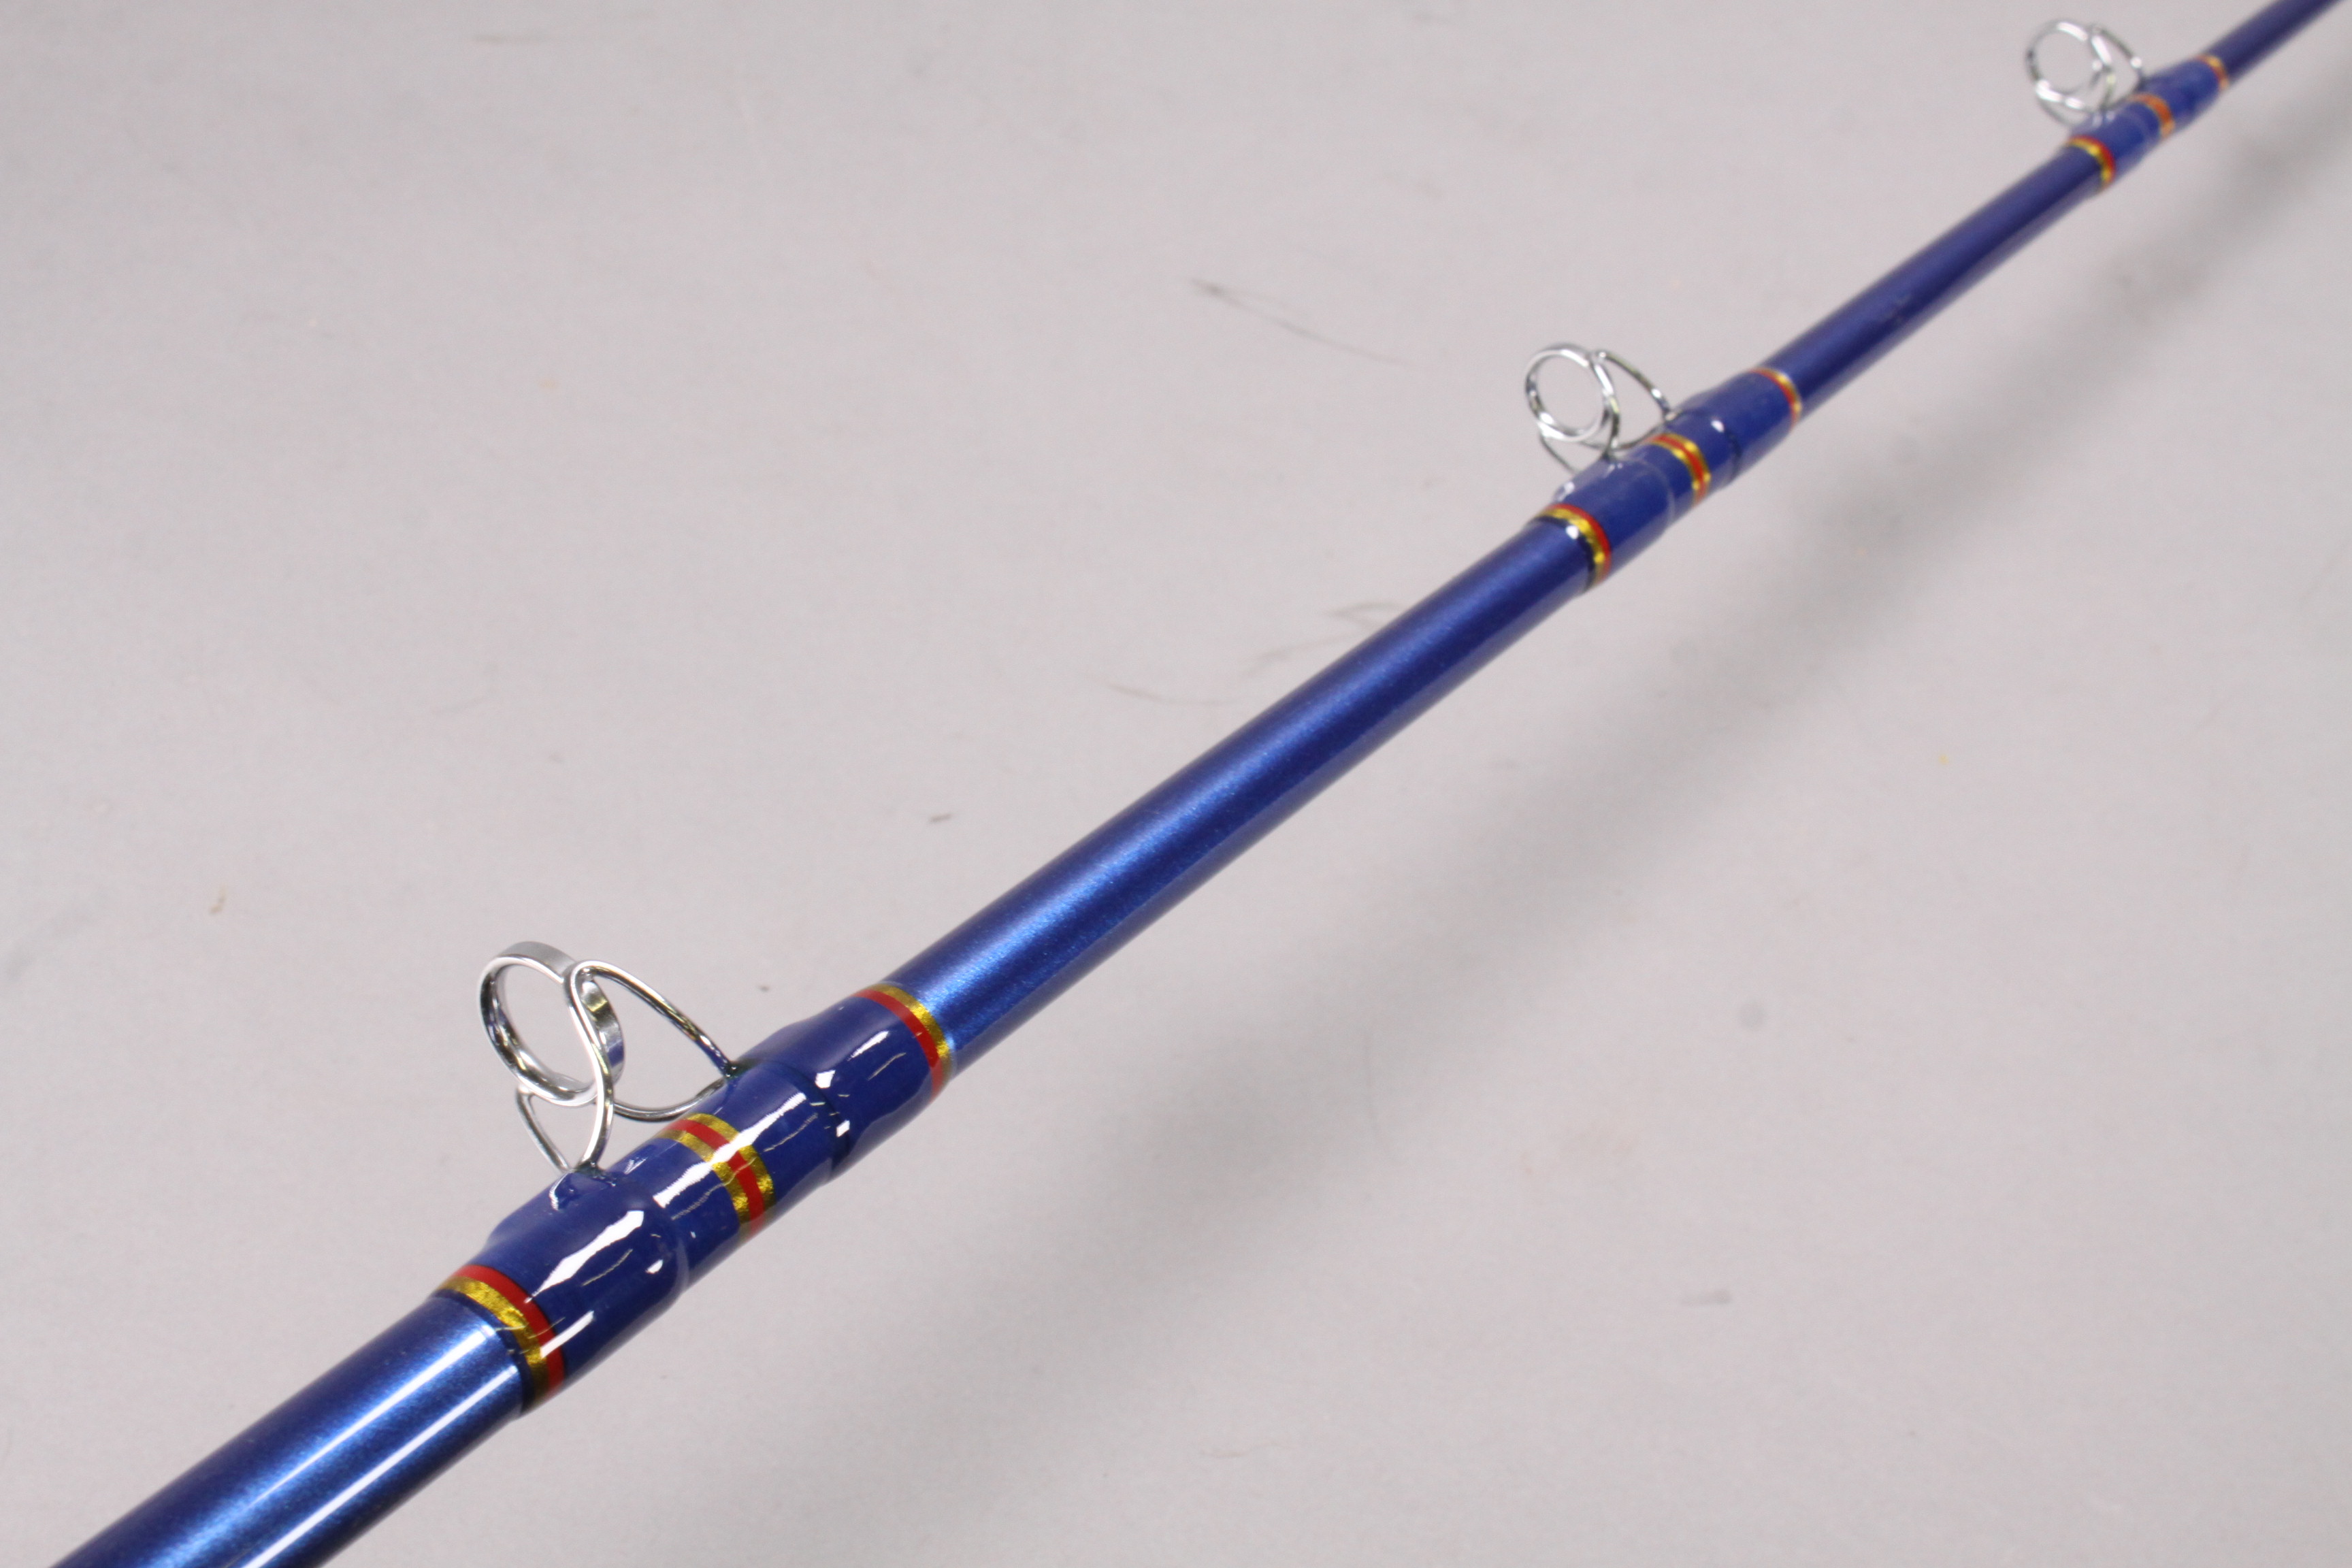 Cabela's Salt Whuppin' Stick 6'6 Fishing Rod